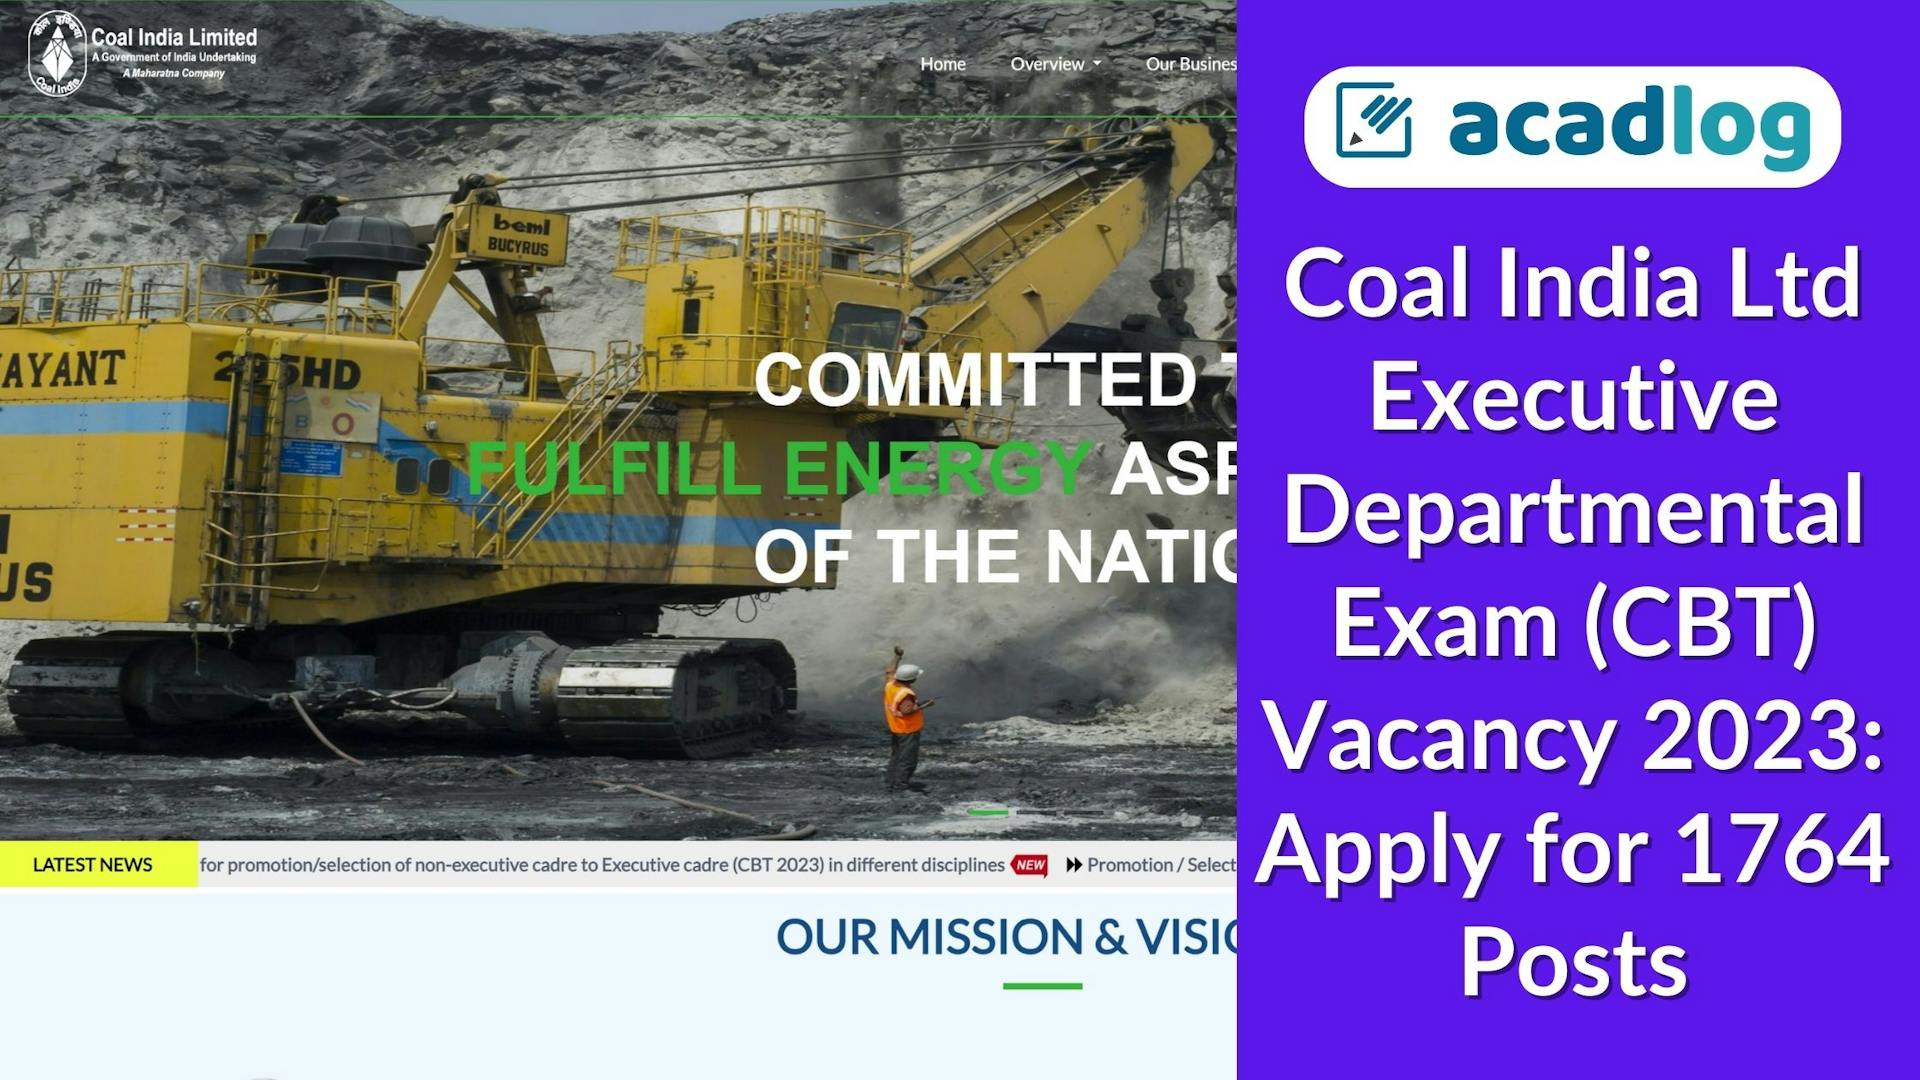 Coal India Ltd Executive Departmental Exam (CBT) Vacancy 2023: Apply for 1764 Posts